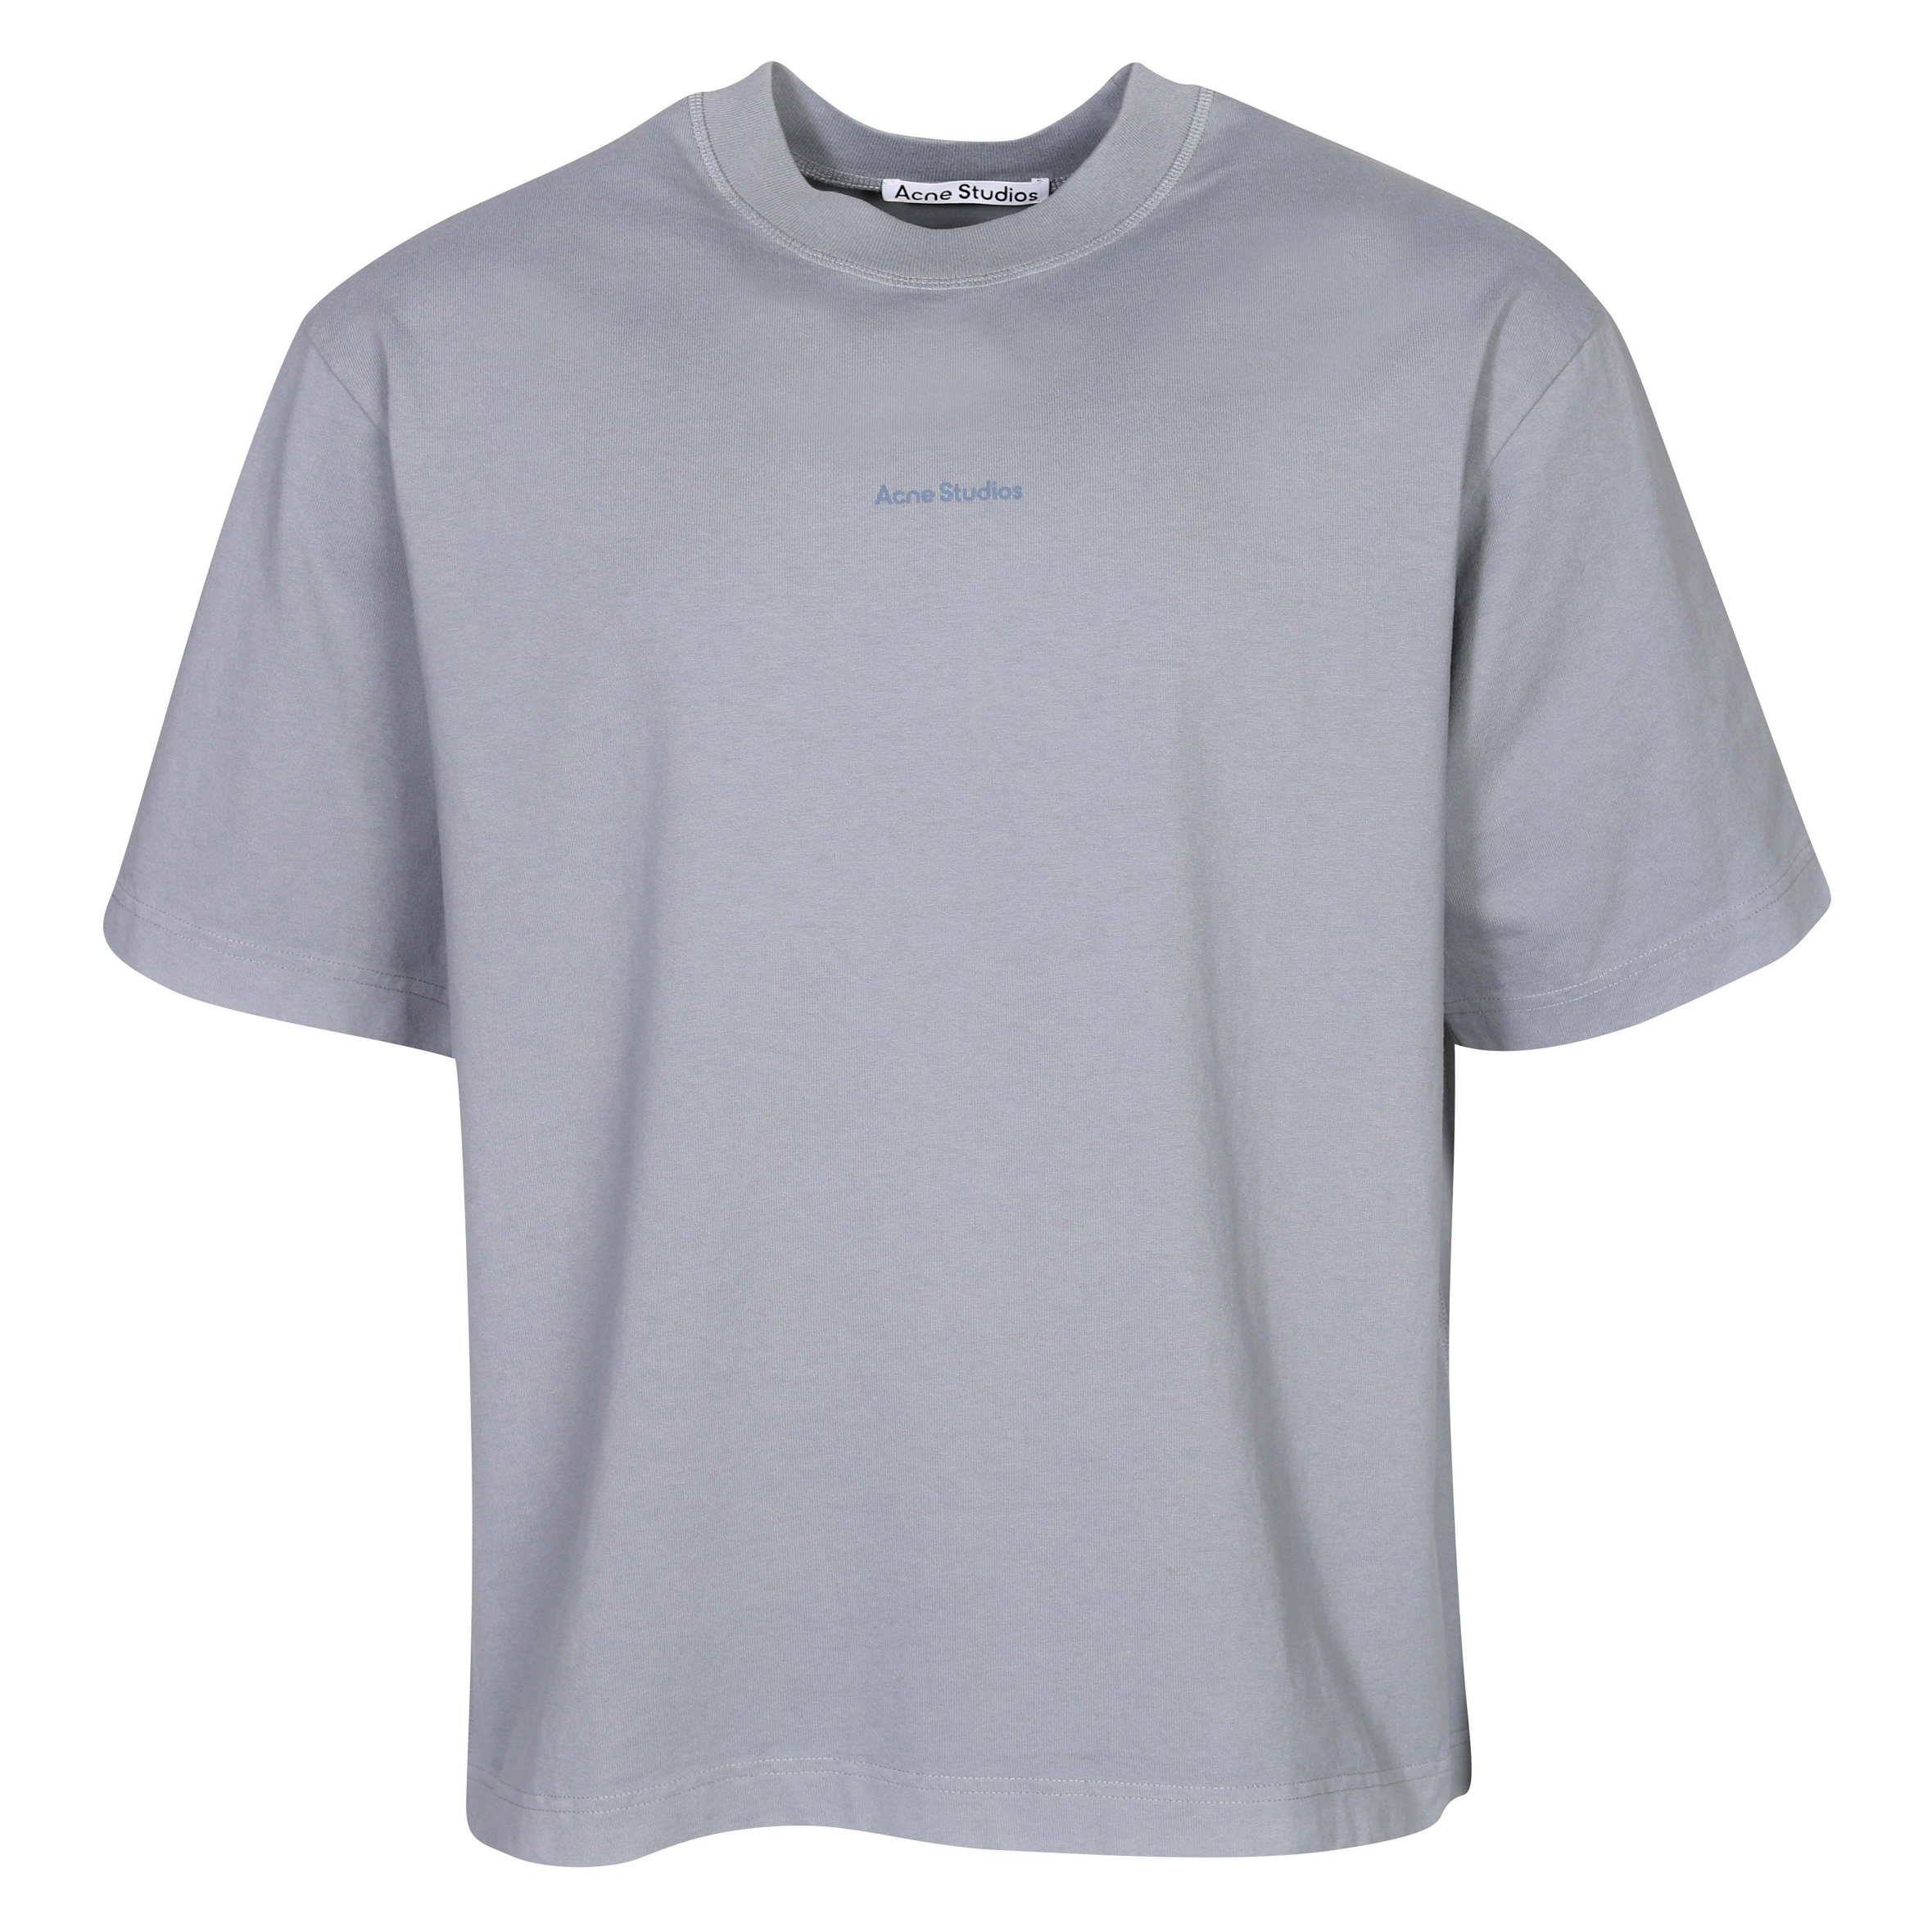 Acne Studios Stamp T-Shirt in Steel Grey XS